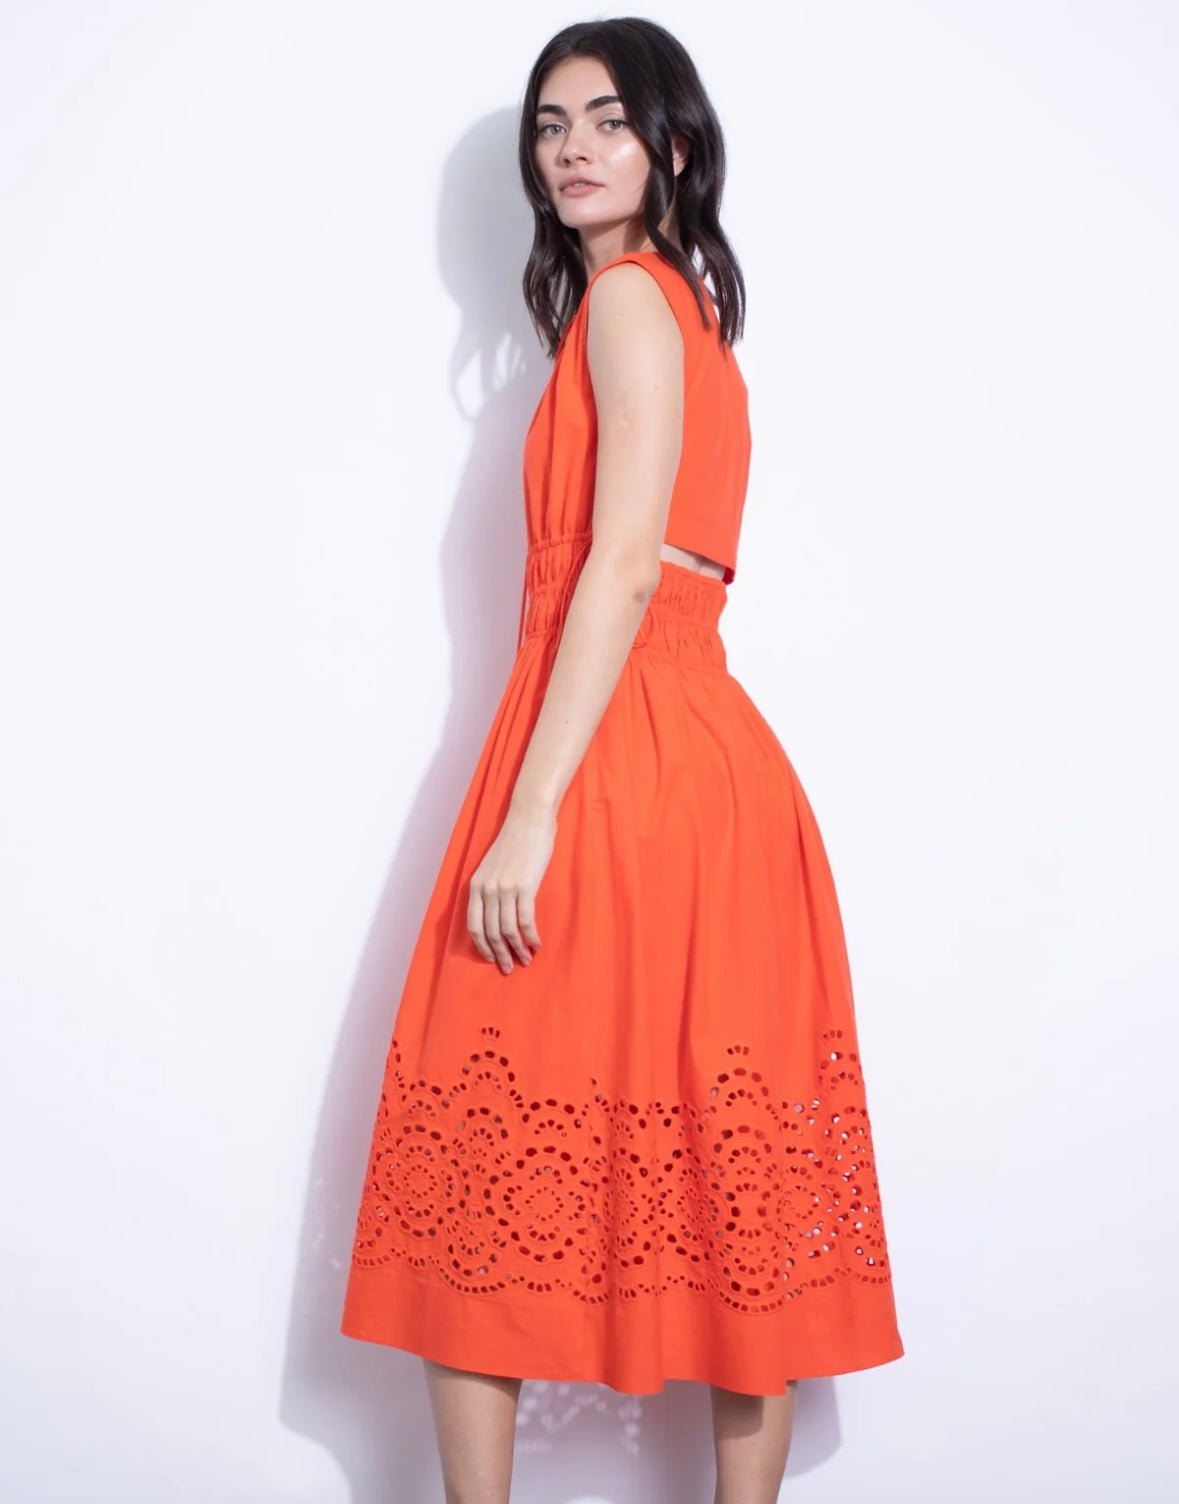 Karina Grimaldi Midi Eyelet Dress in Coral Red - Estilo Boutique